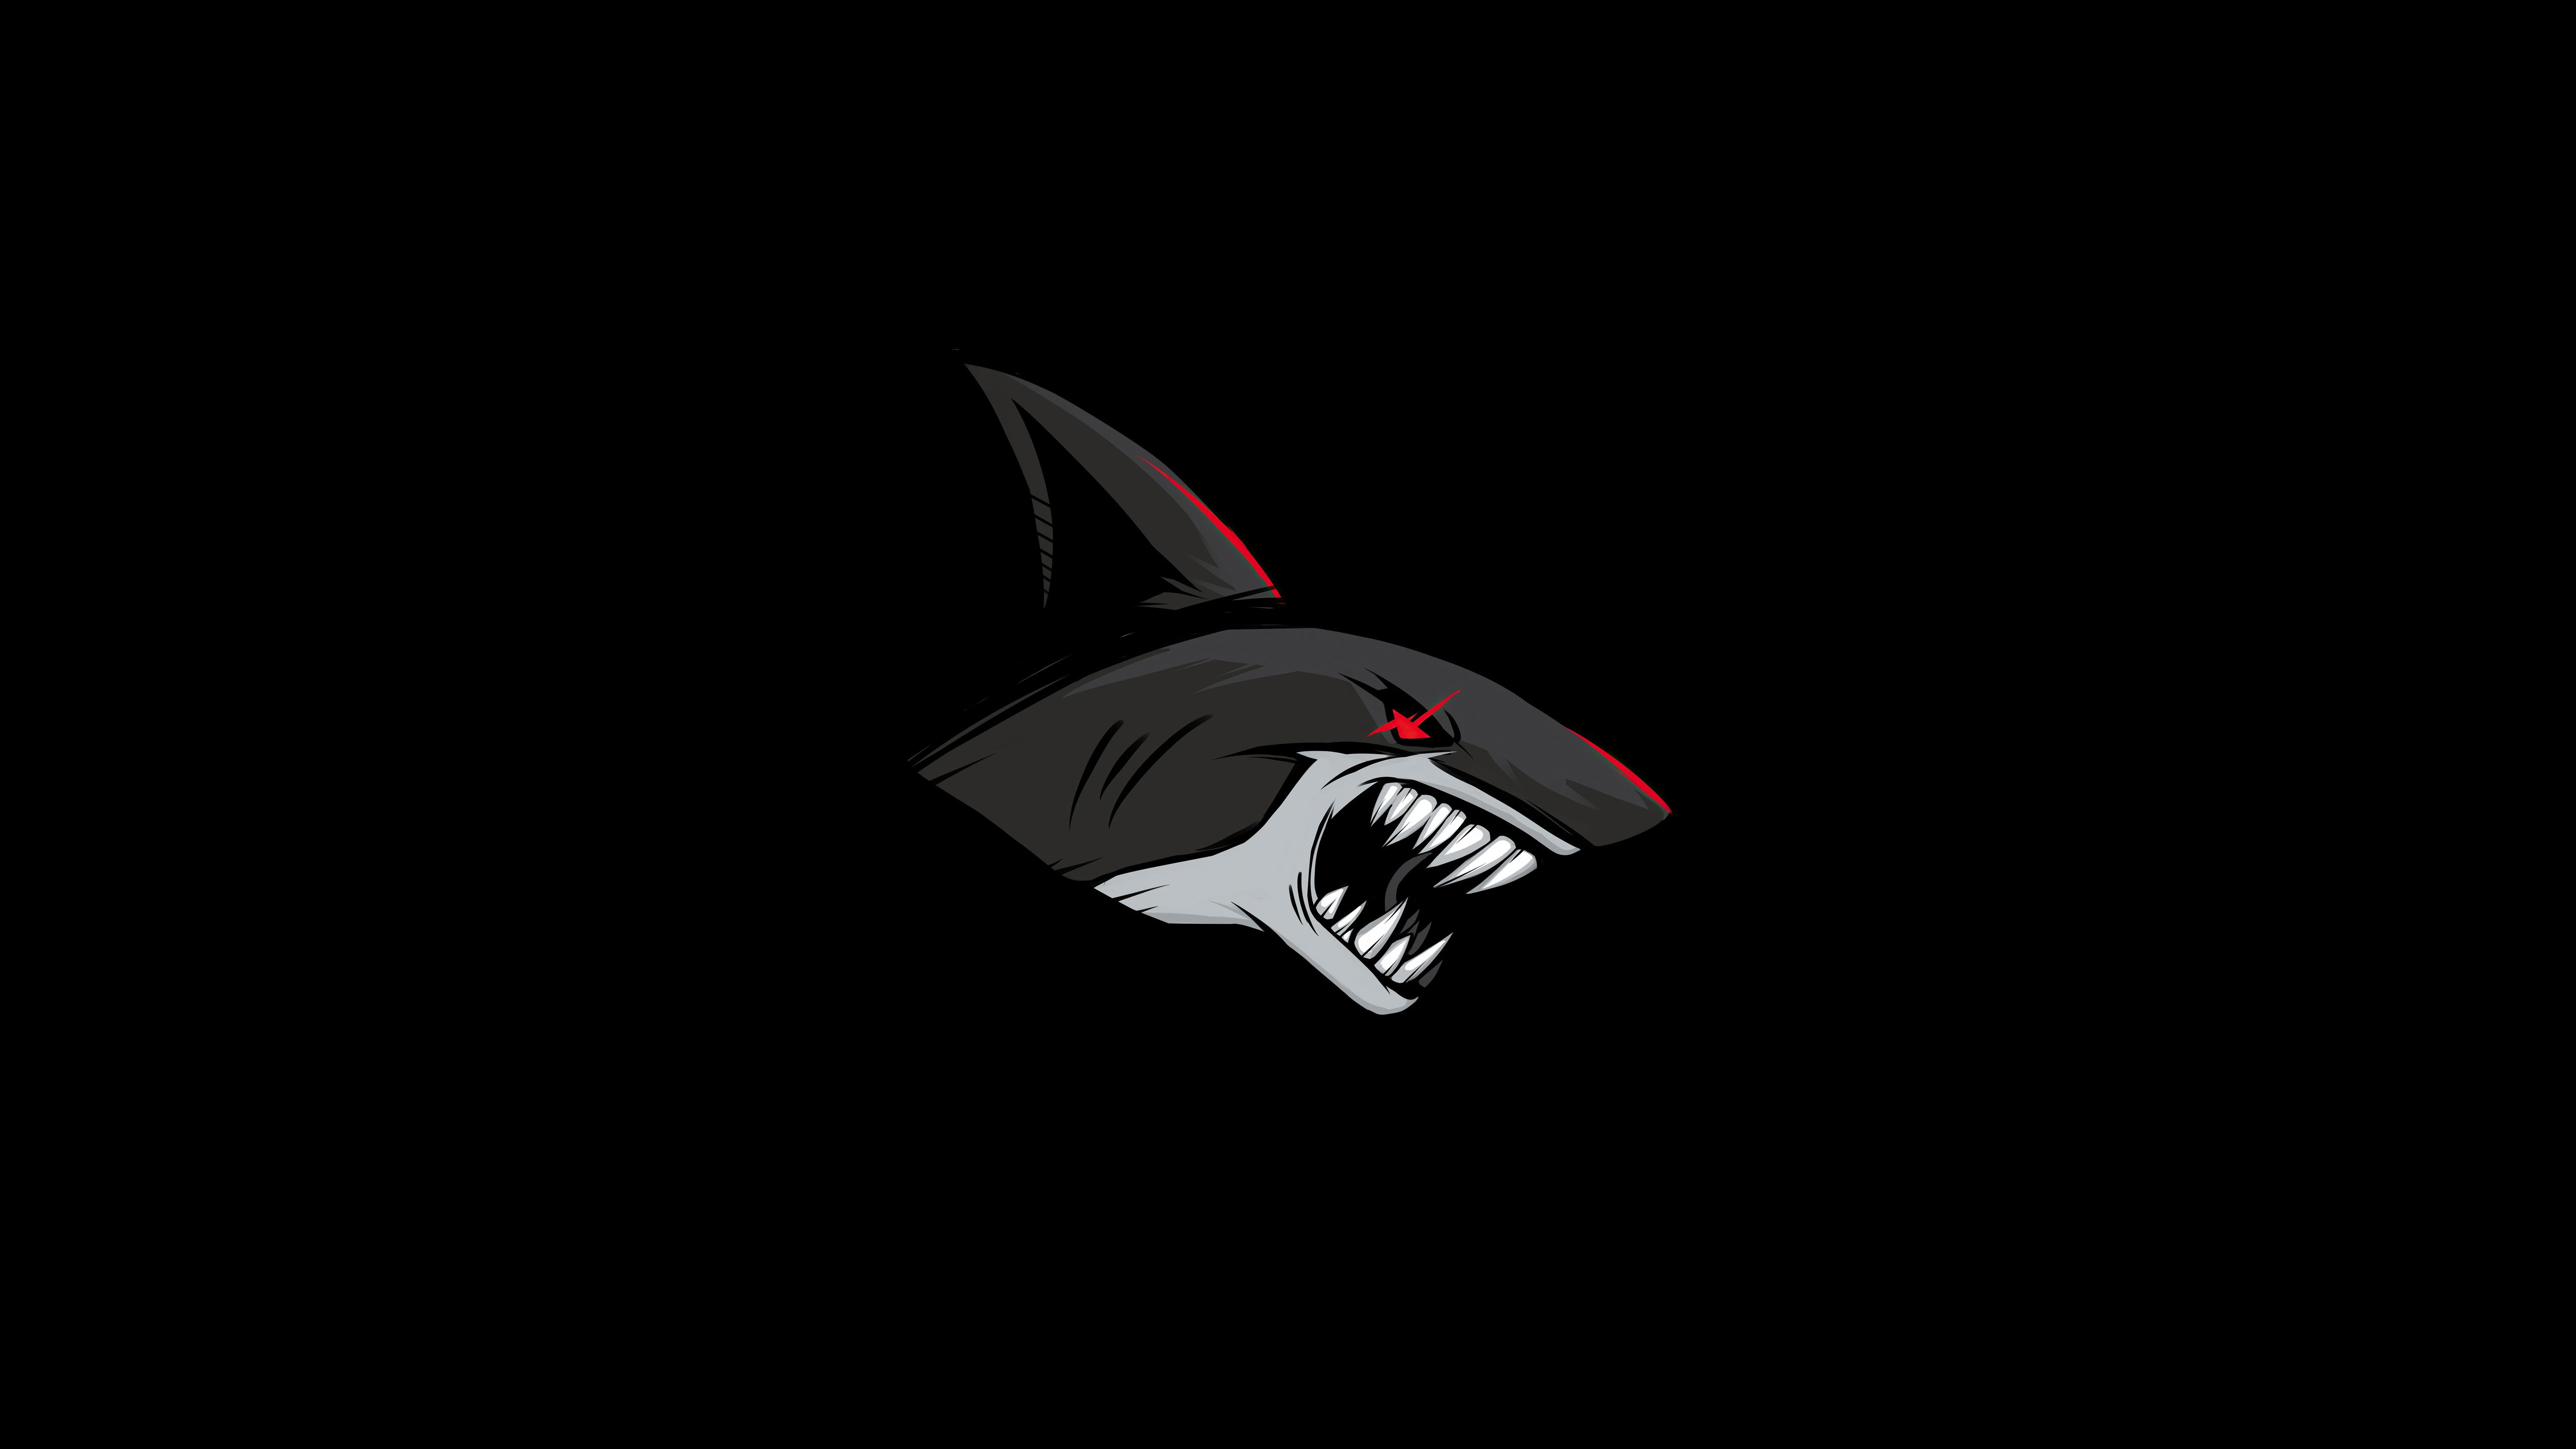 Shark Dark 5k, HD Artist, 4k Wallpaper, Image, Background, Photo and Picture